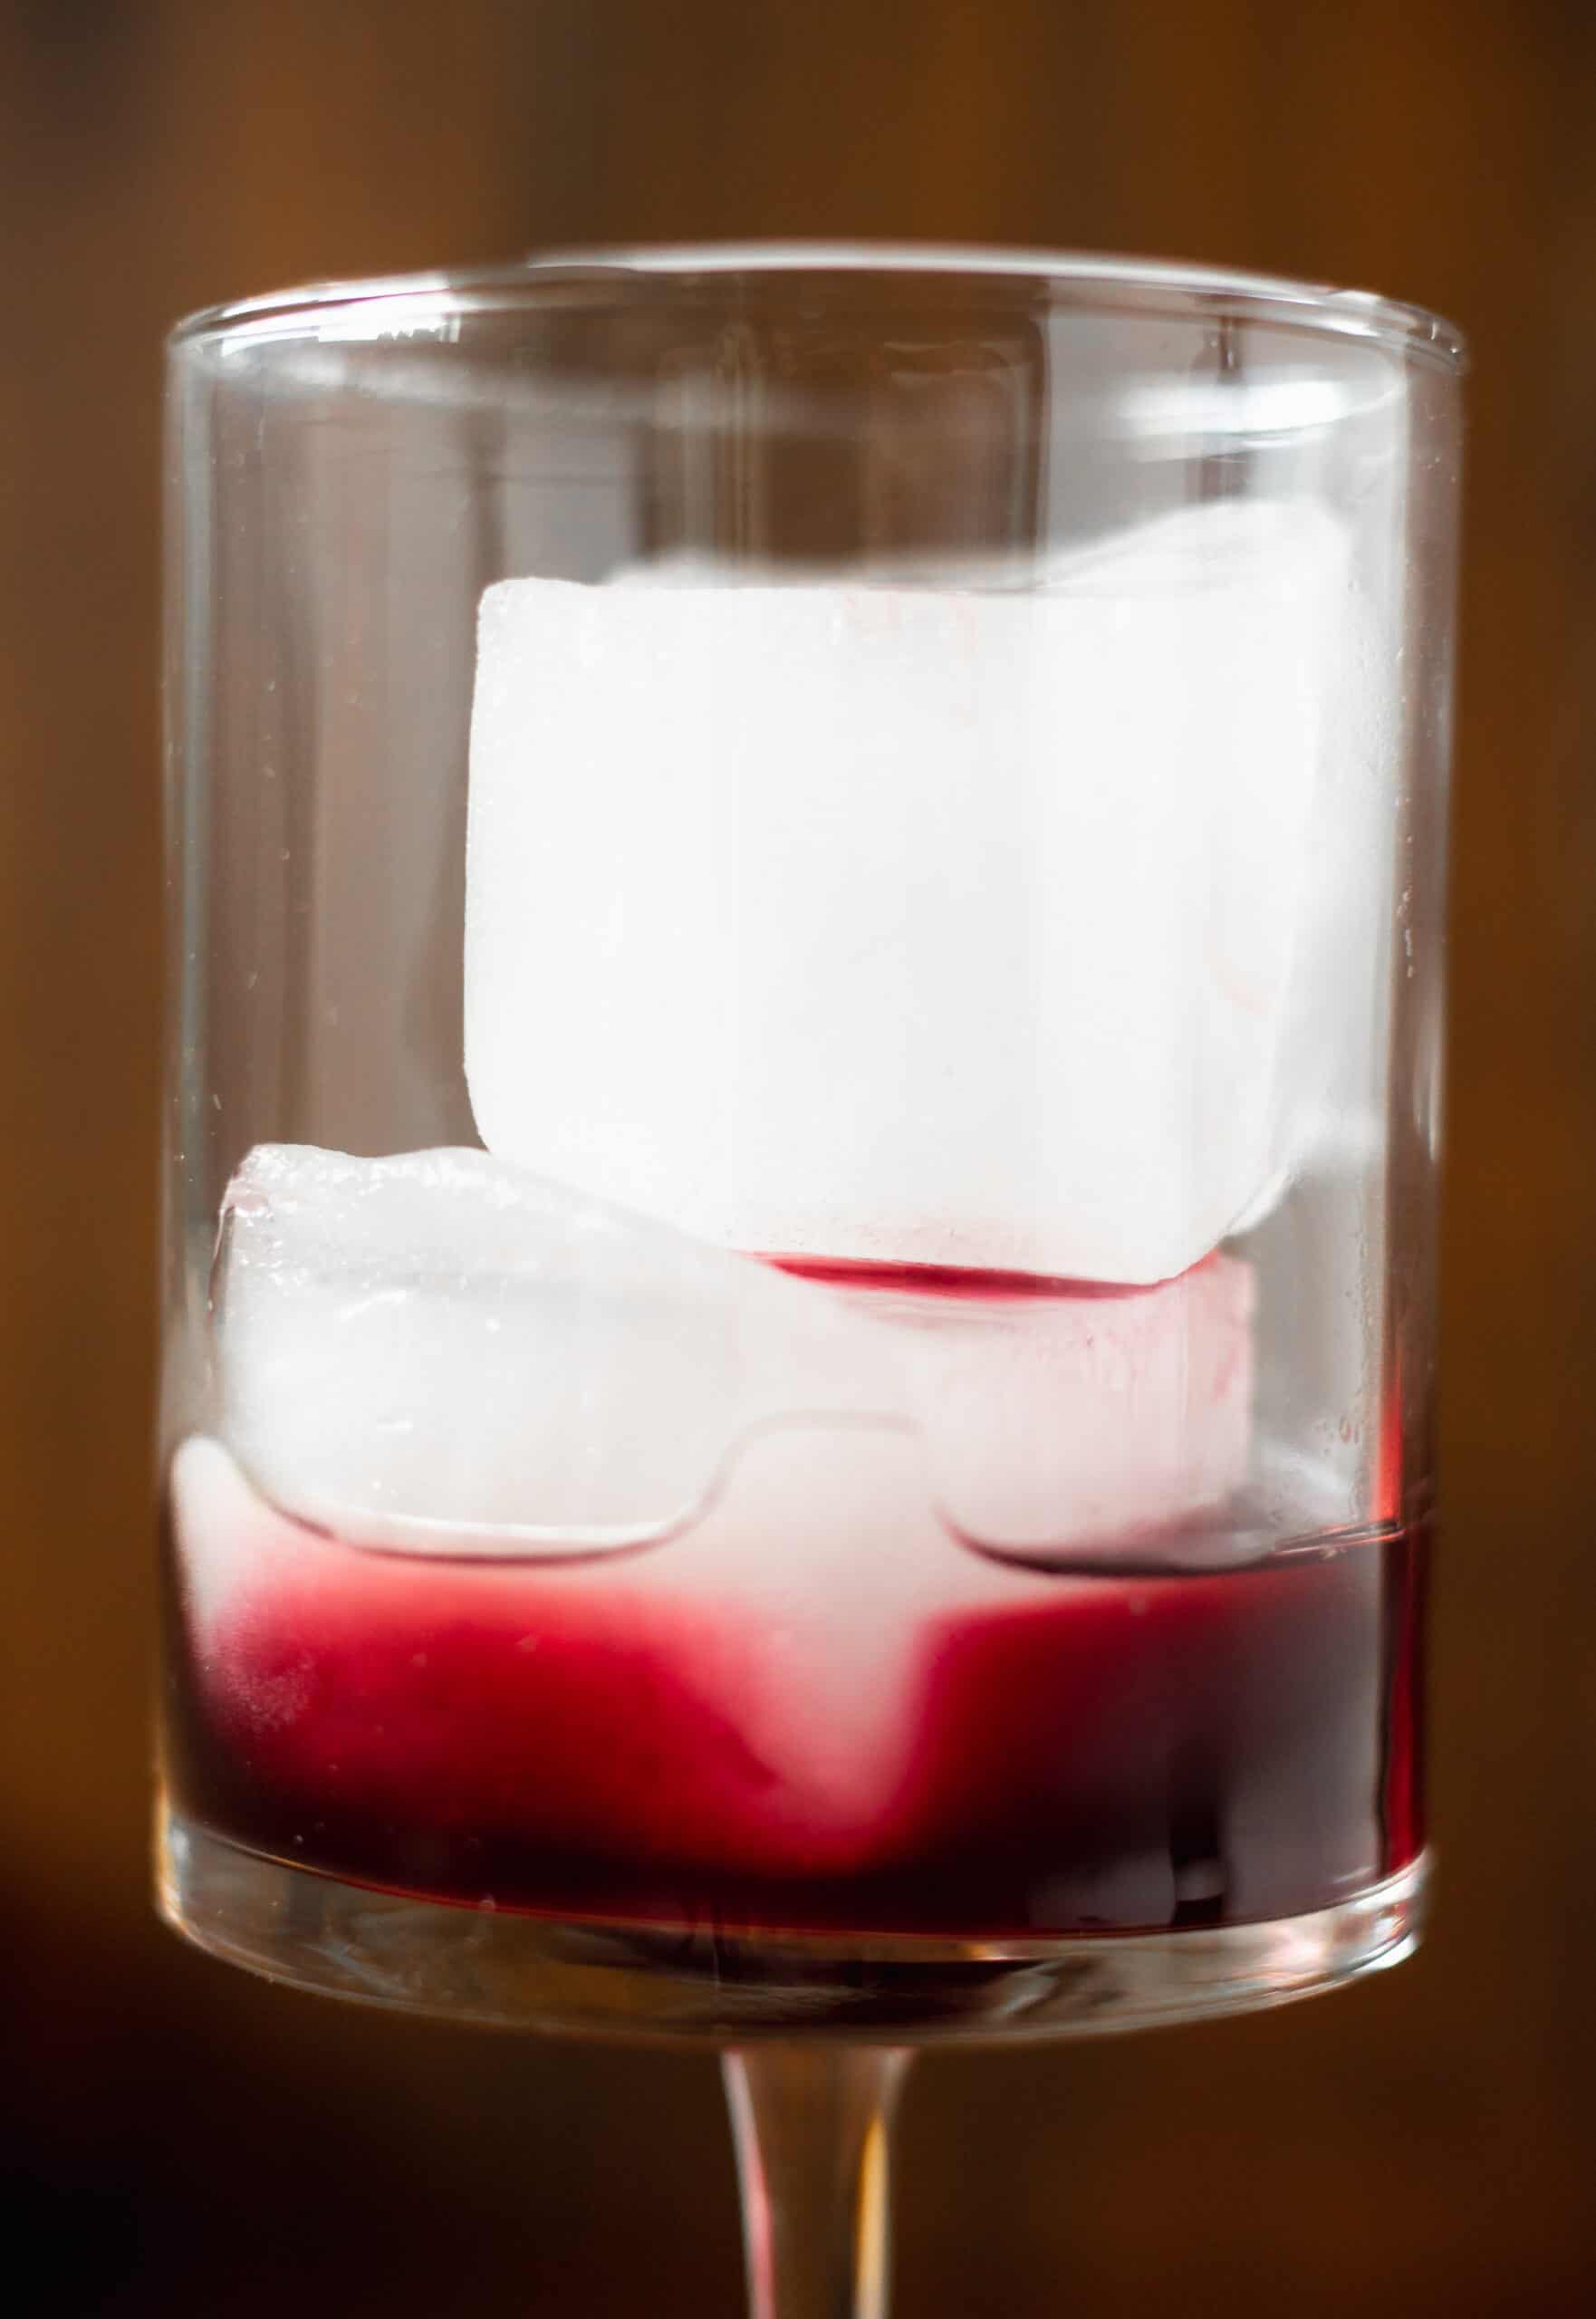 pomegranate juice in a glass